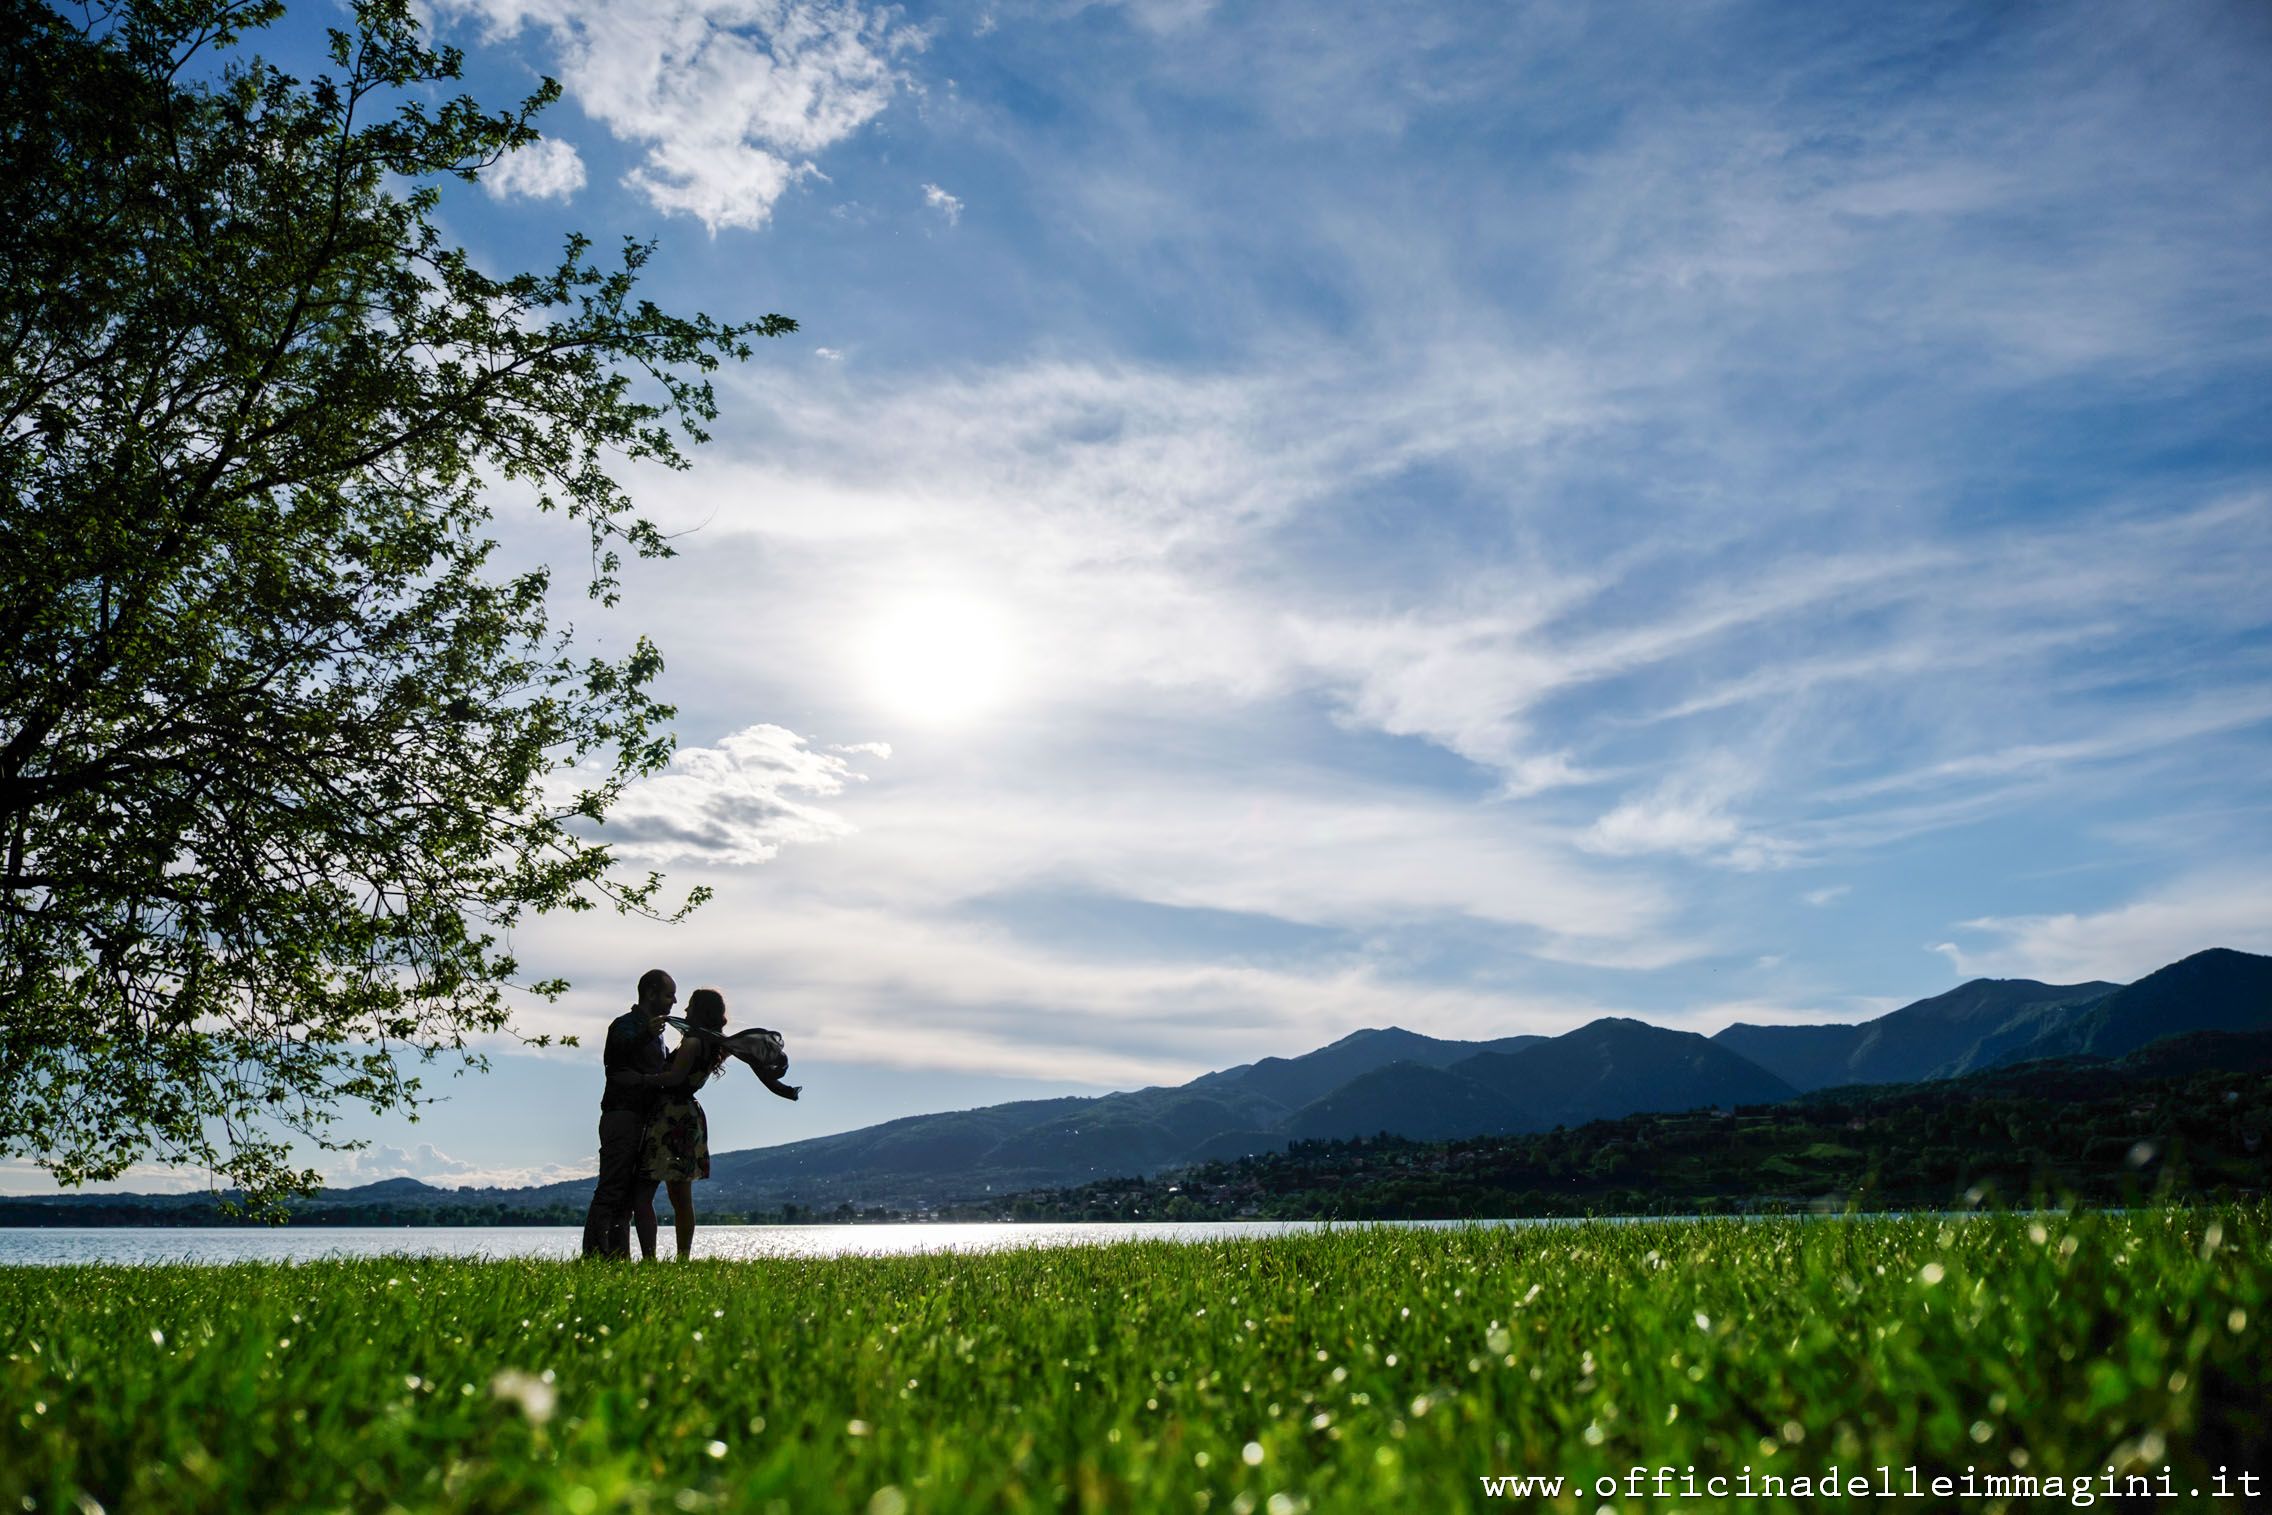 Prenozze Lago Pusiano – Engagement in Italy: shooting at Pusiano lake